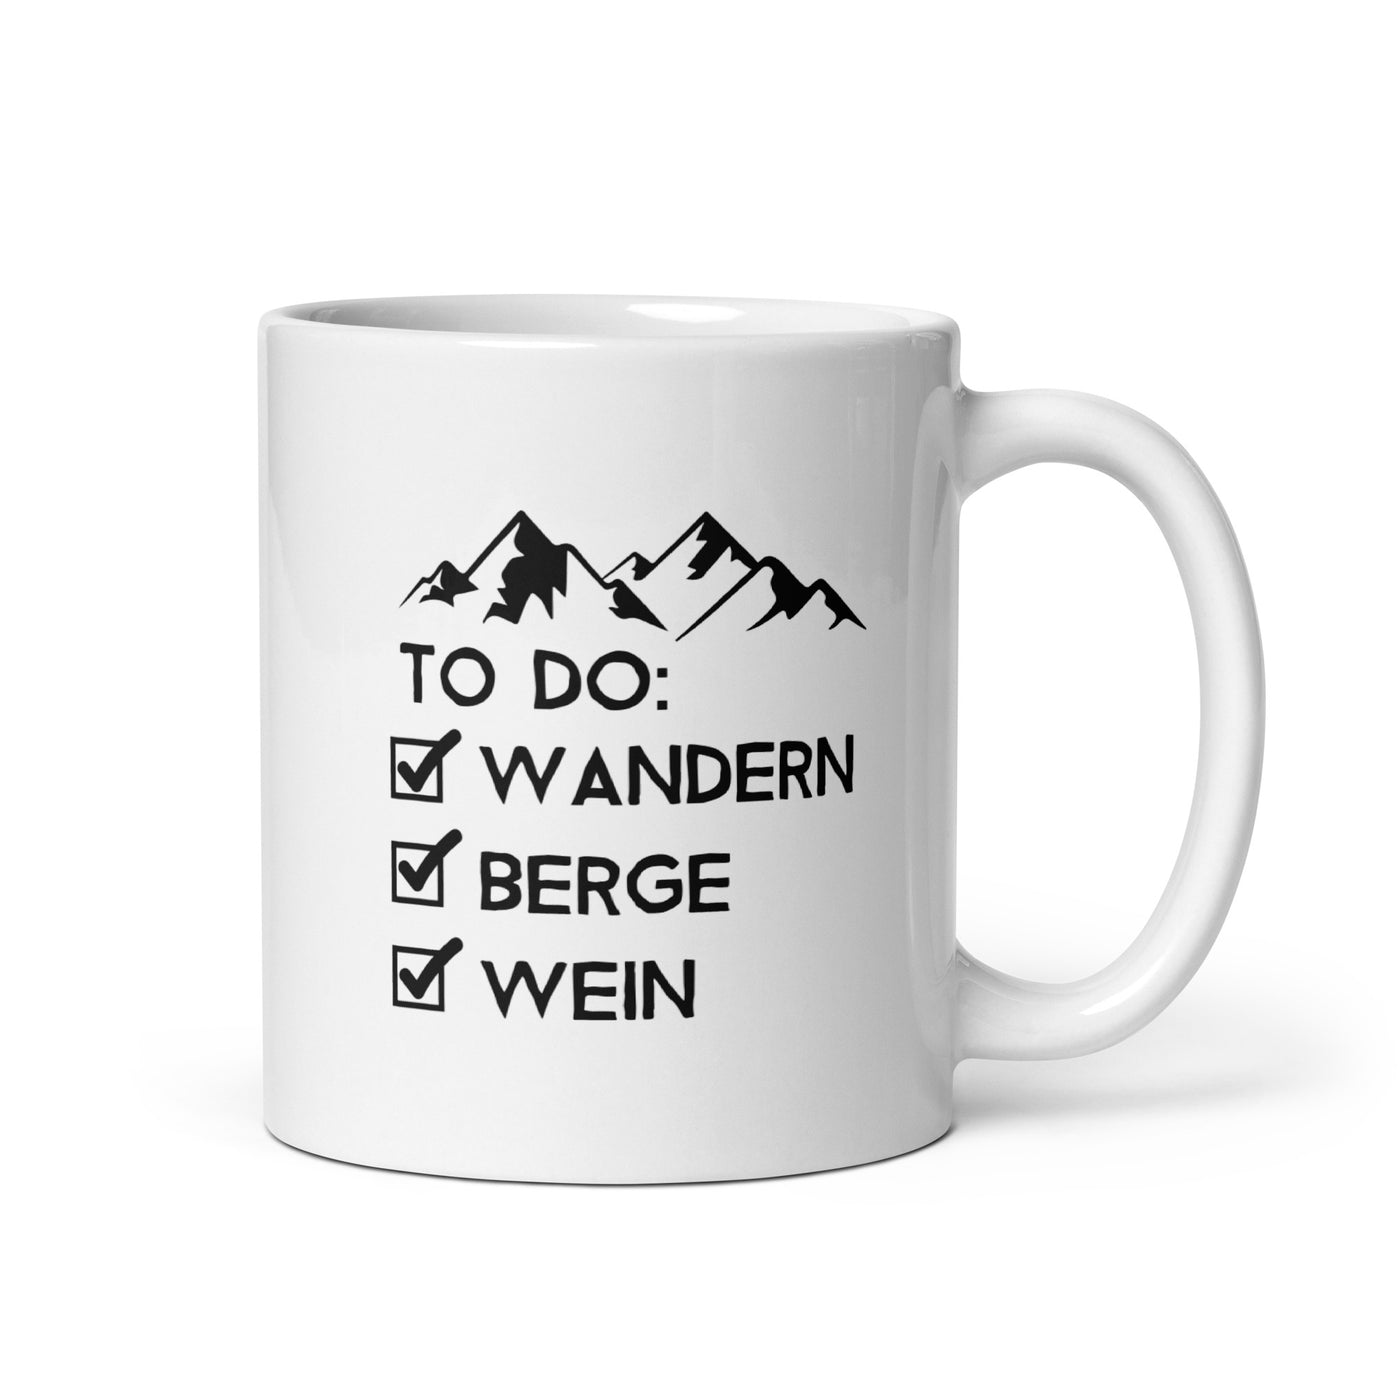 To Do Liste - Wandern, Berge, Wein - Tasse wandern